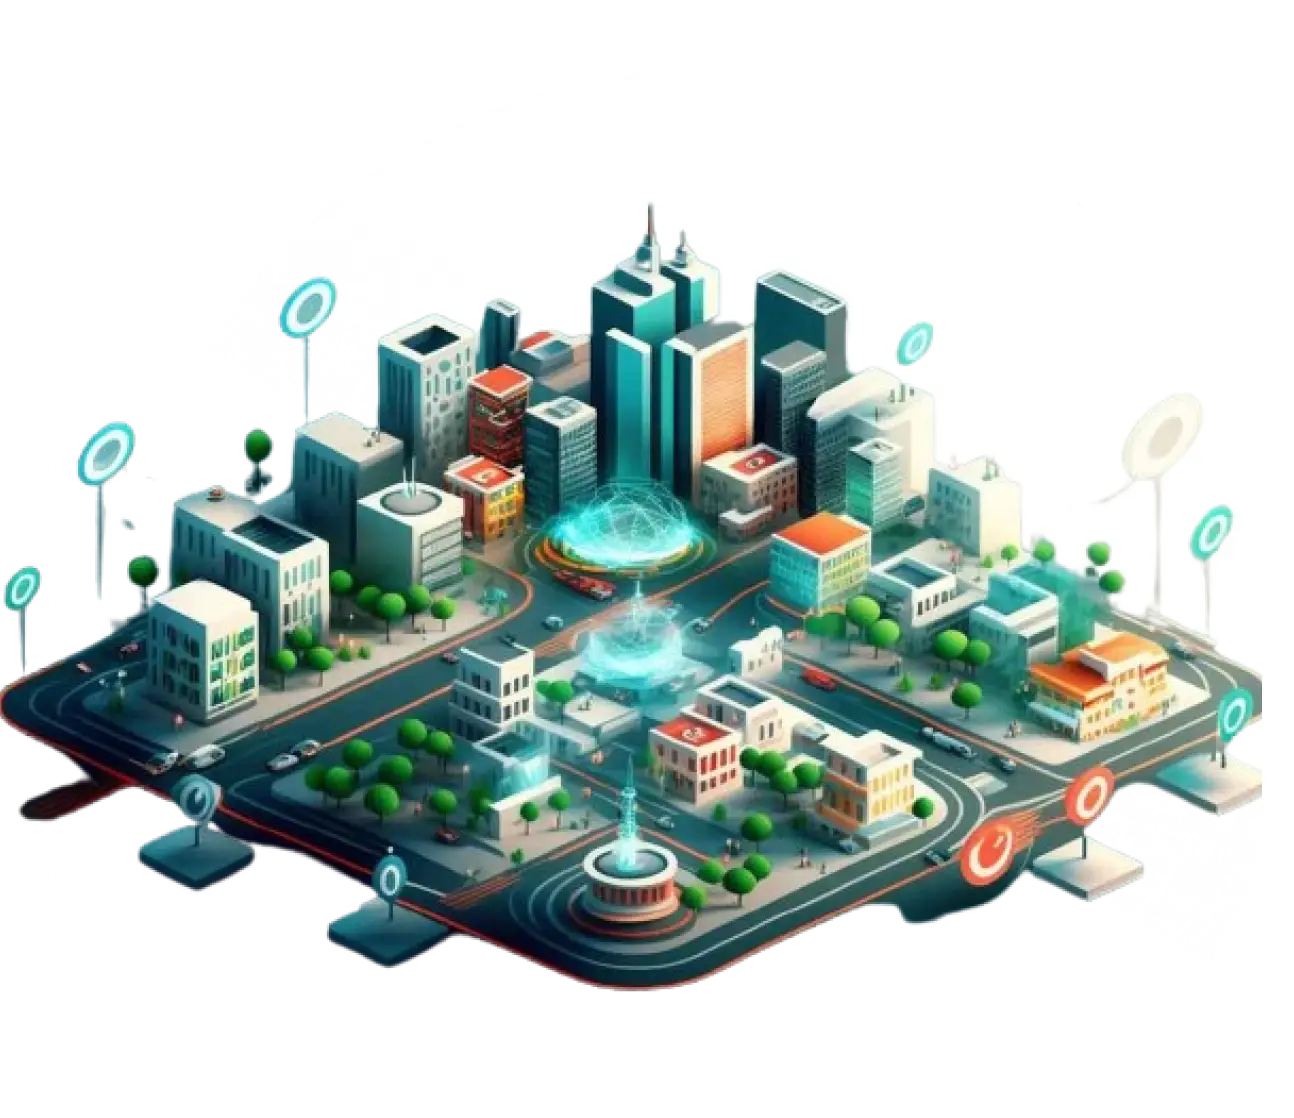 A smart city platform